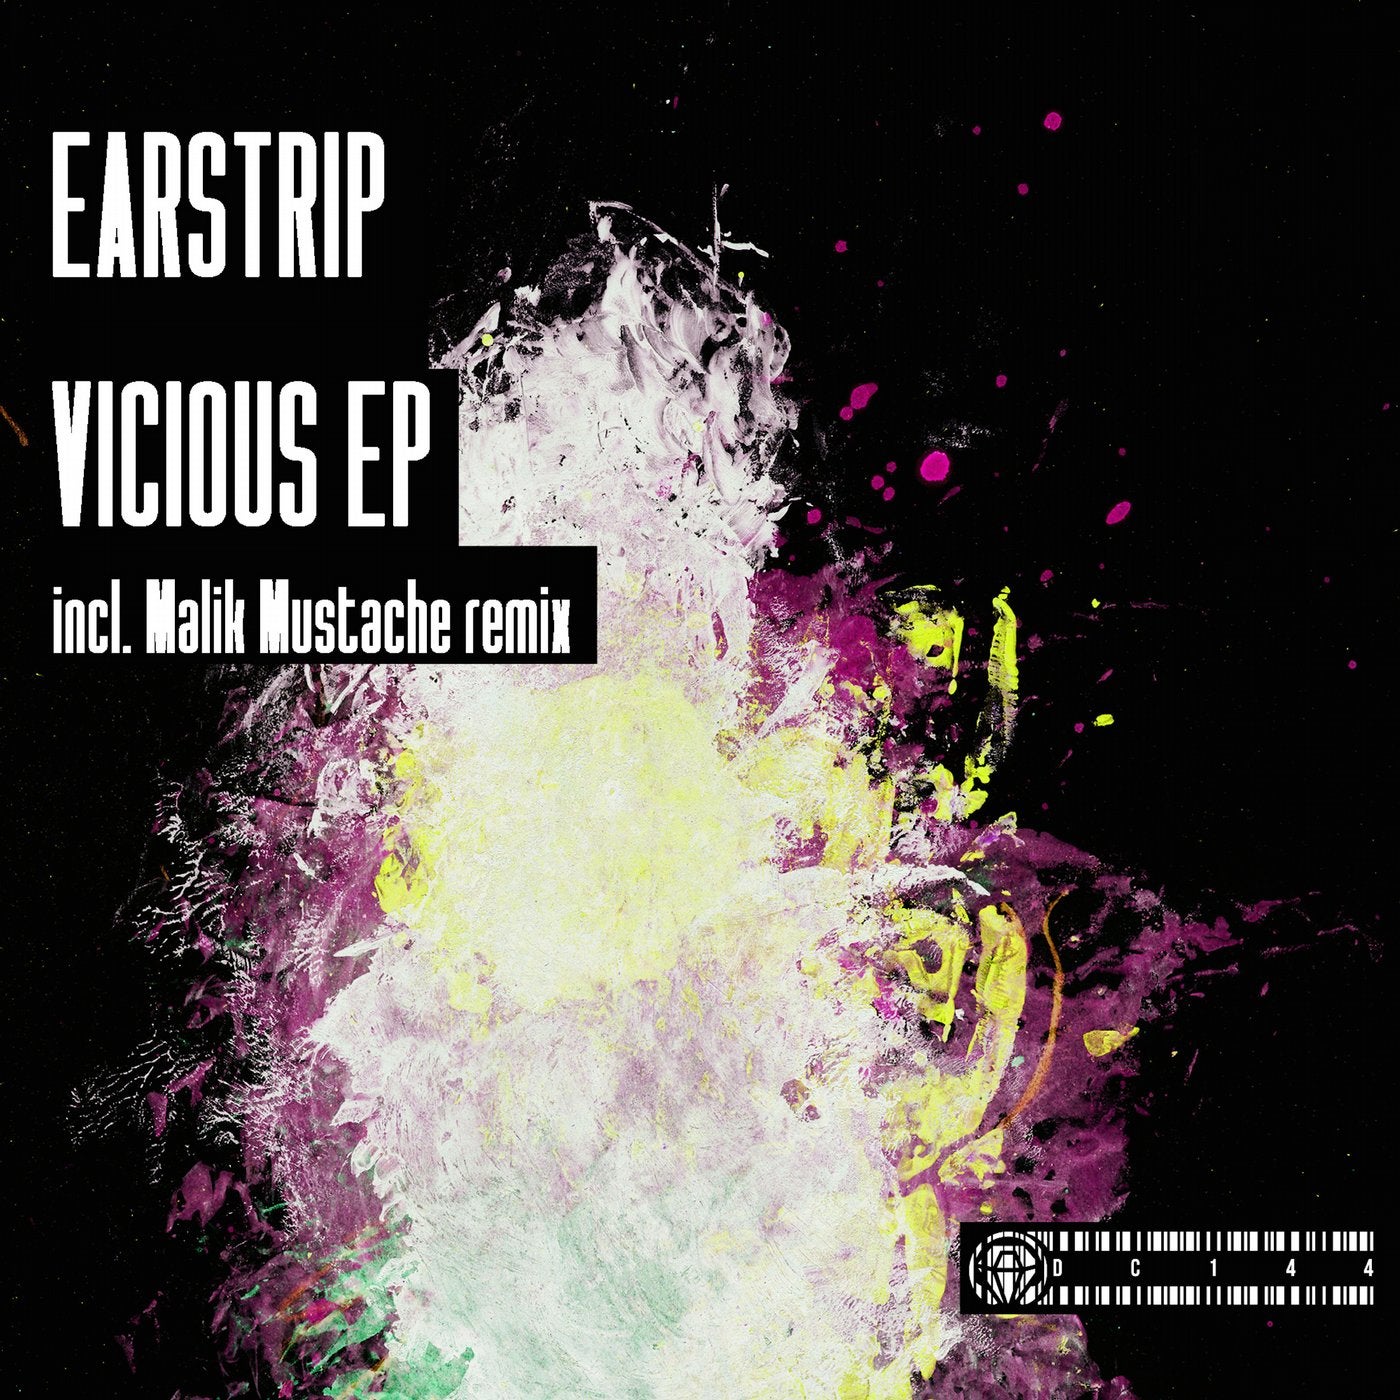 Vicious EP